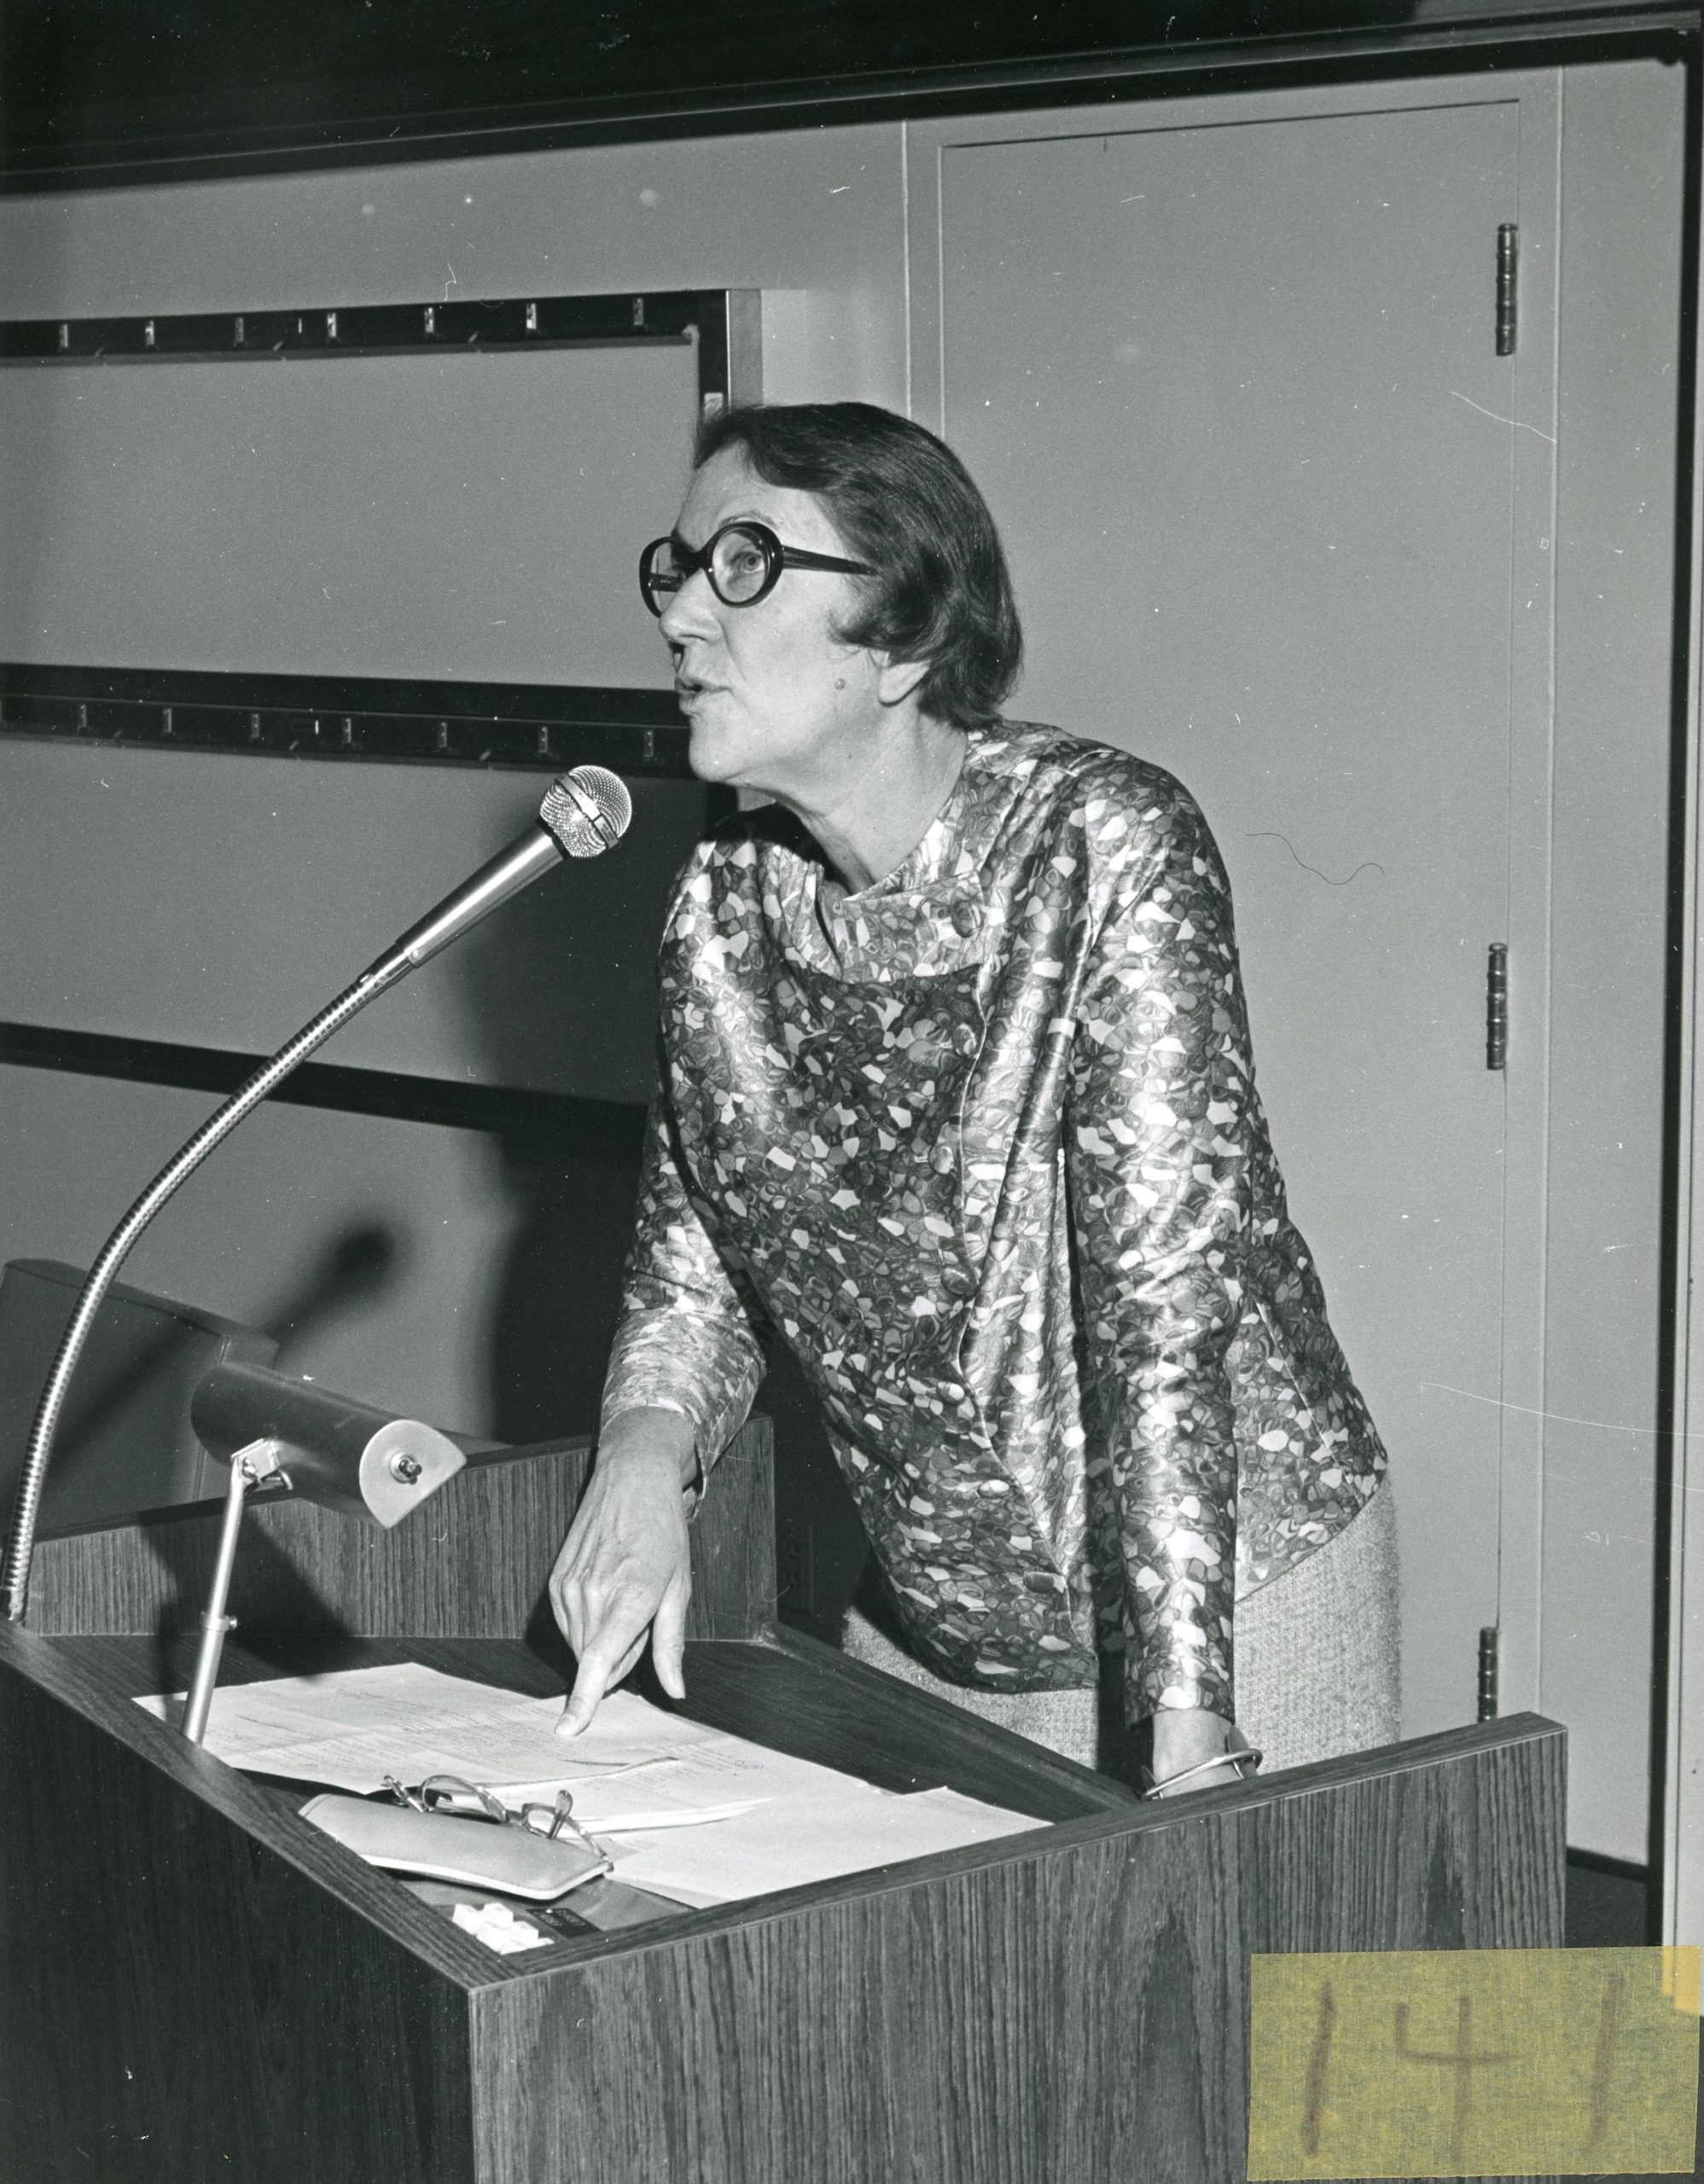 Moyra Allen gives speech at a podium